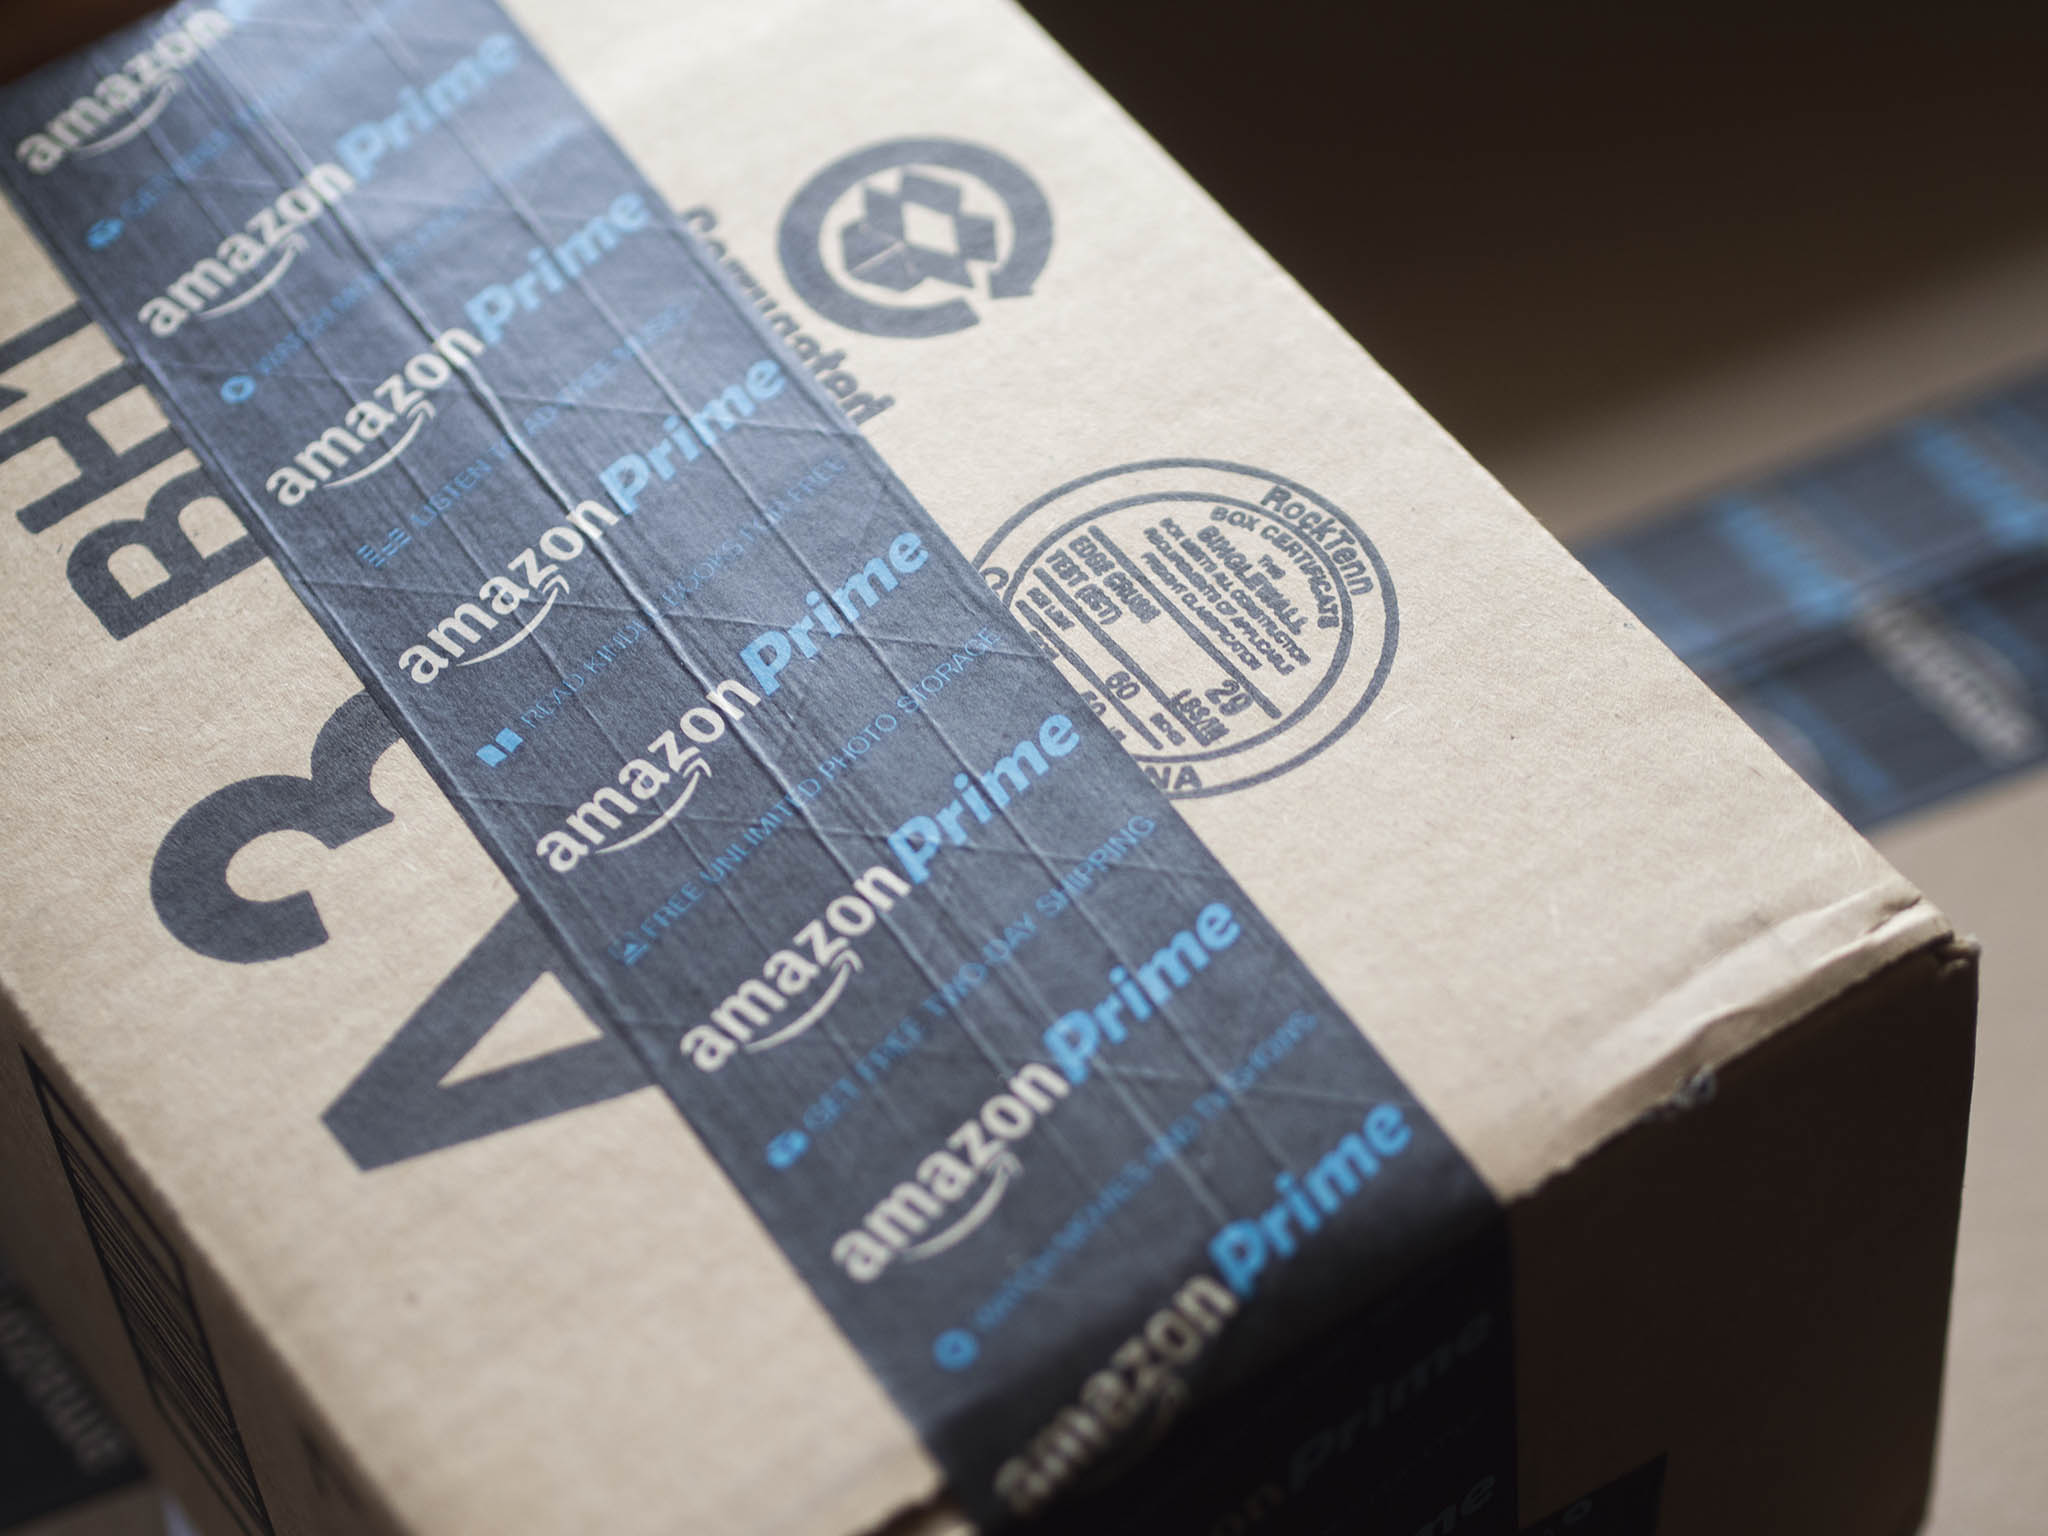 Amazon Prime box